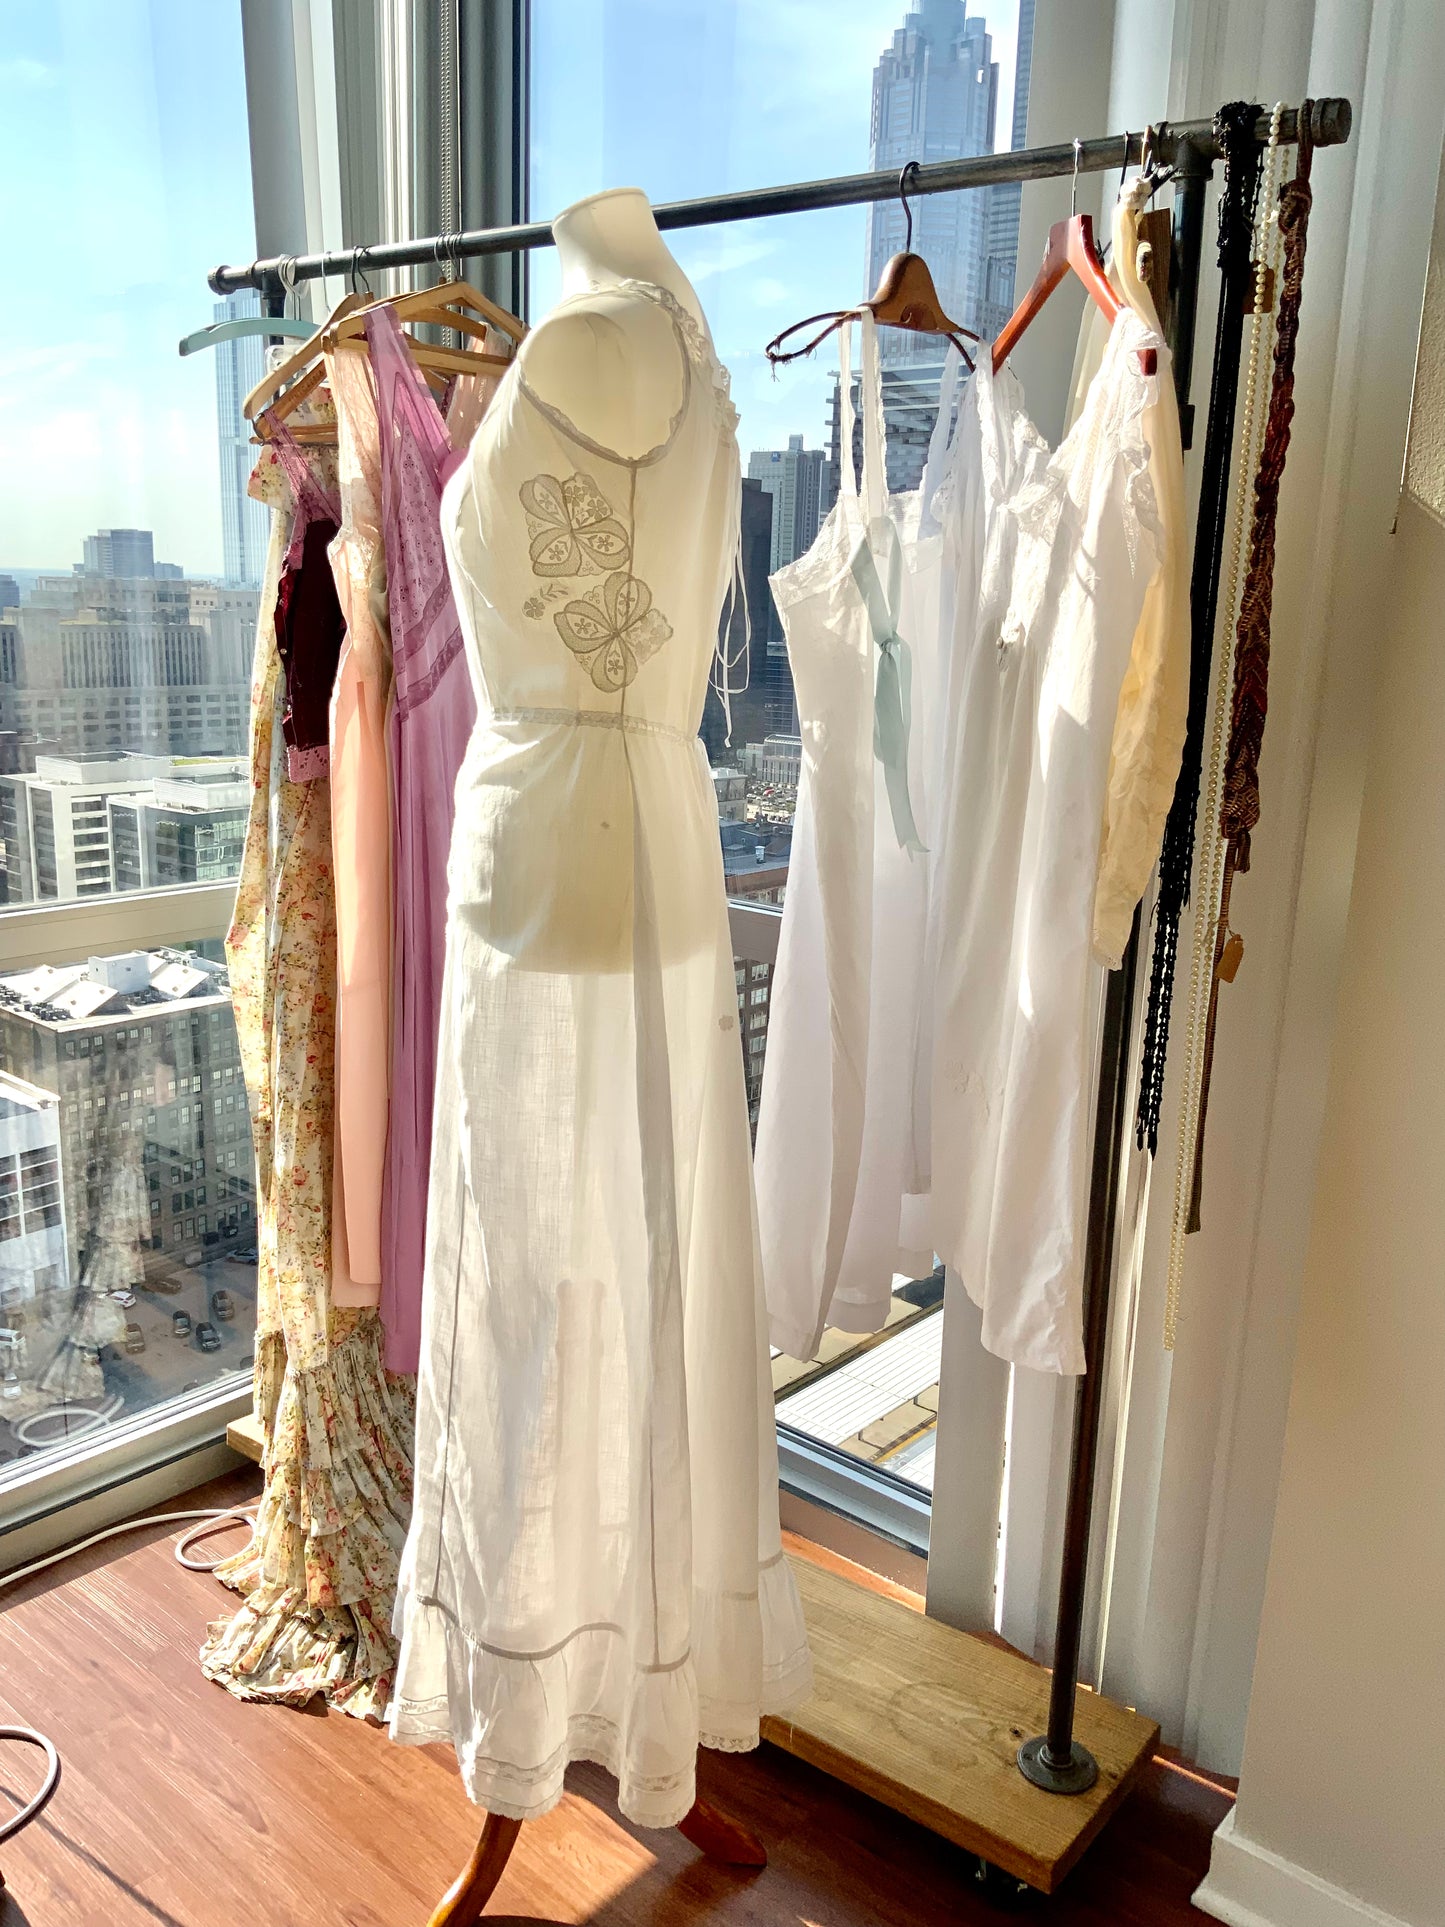 Antique Slip Dress / Nightgown / Bridal